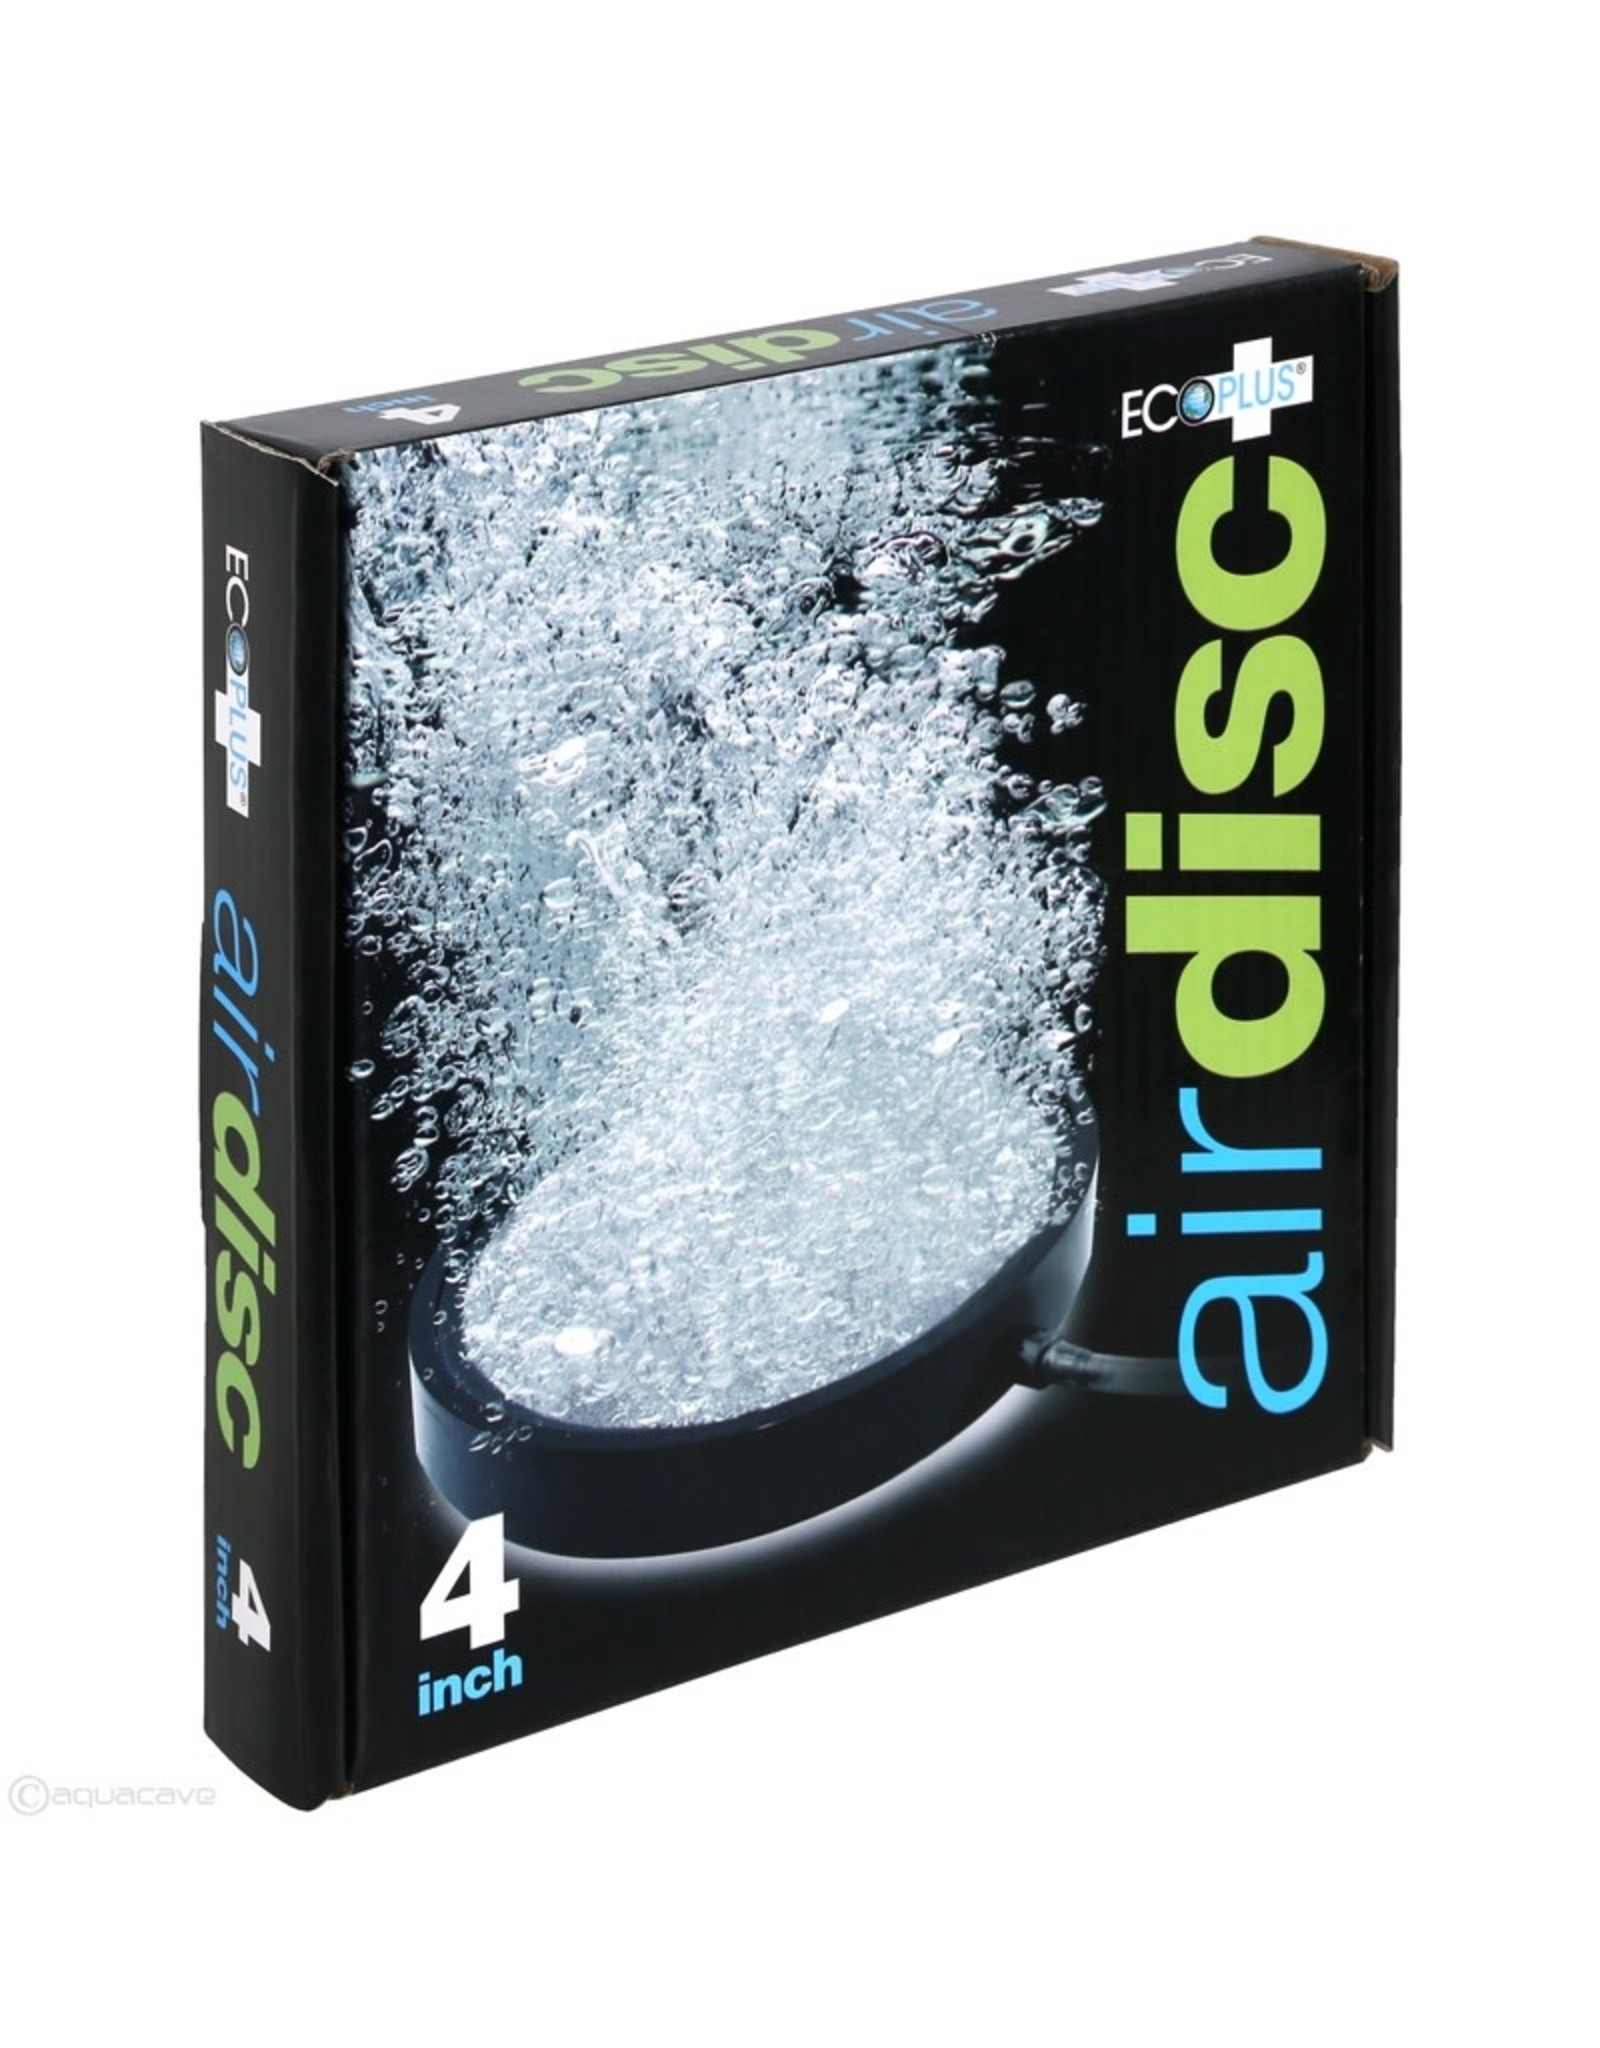 Eco Plus EcoPlus Hydrovescent Air Disc 4 in